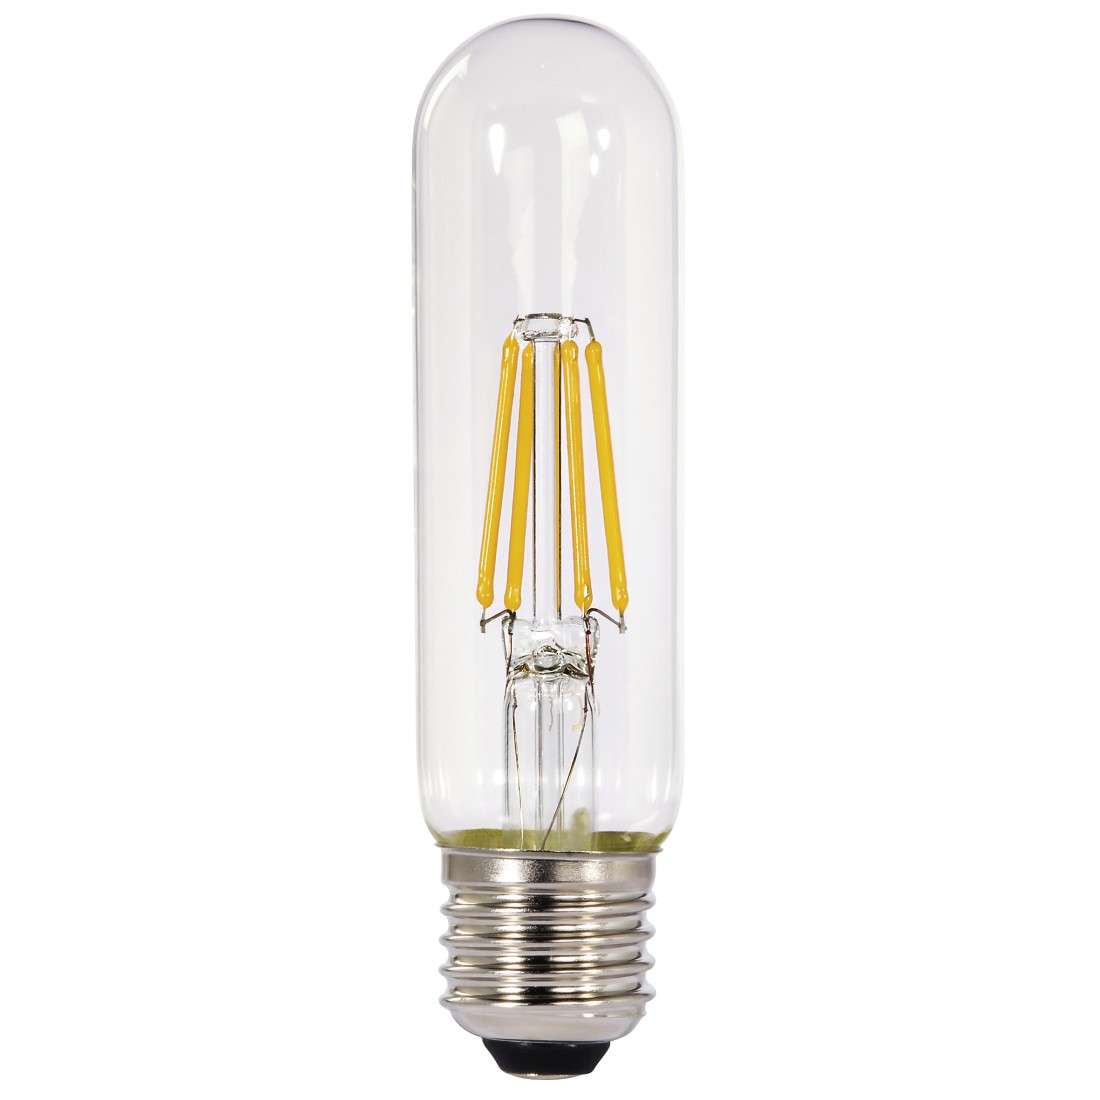 XAVAX LED-Filament, E27, 470lm ersetzt 40W, T32 Röhrenlampe, Warmweiß, dimmbar